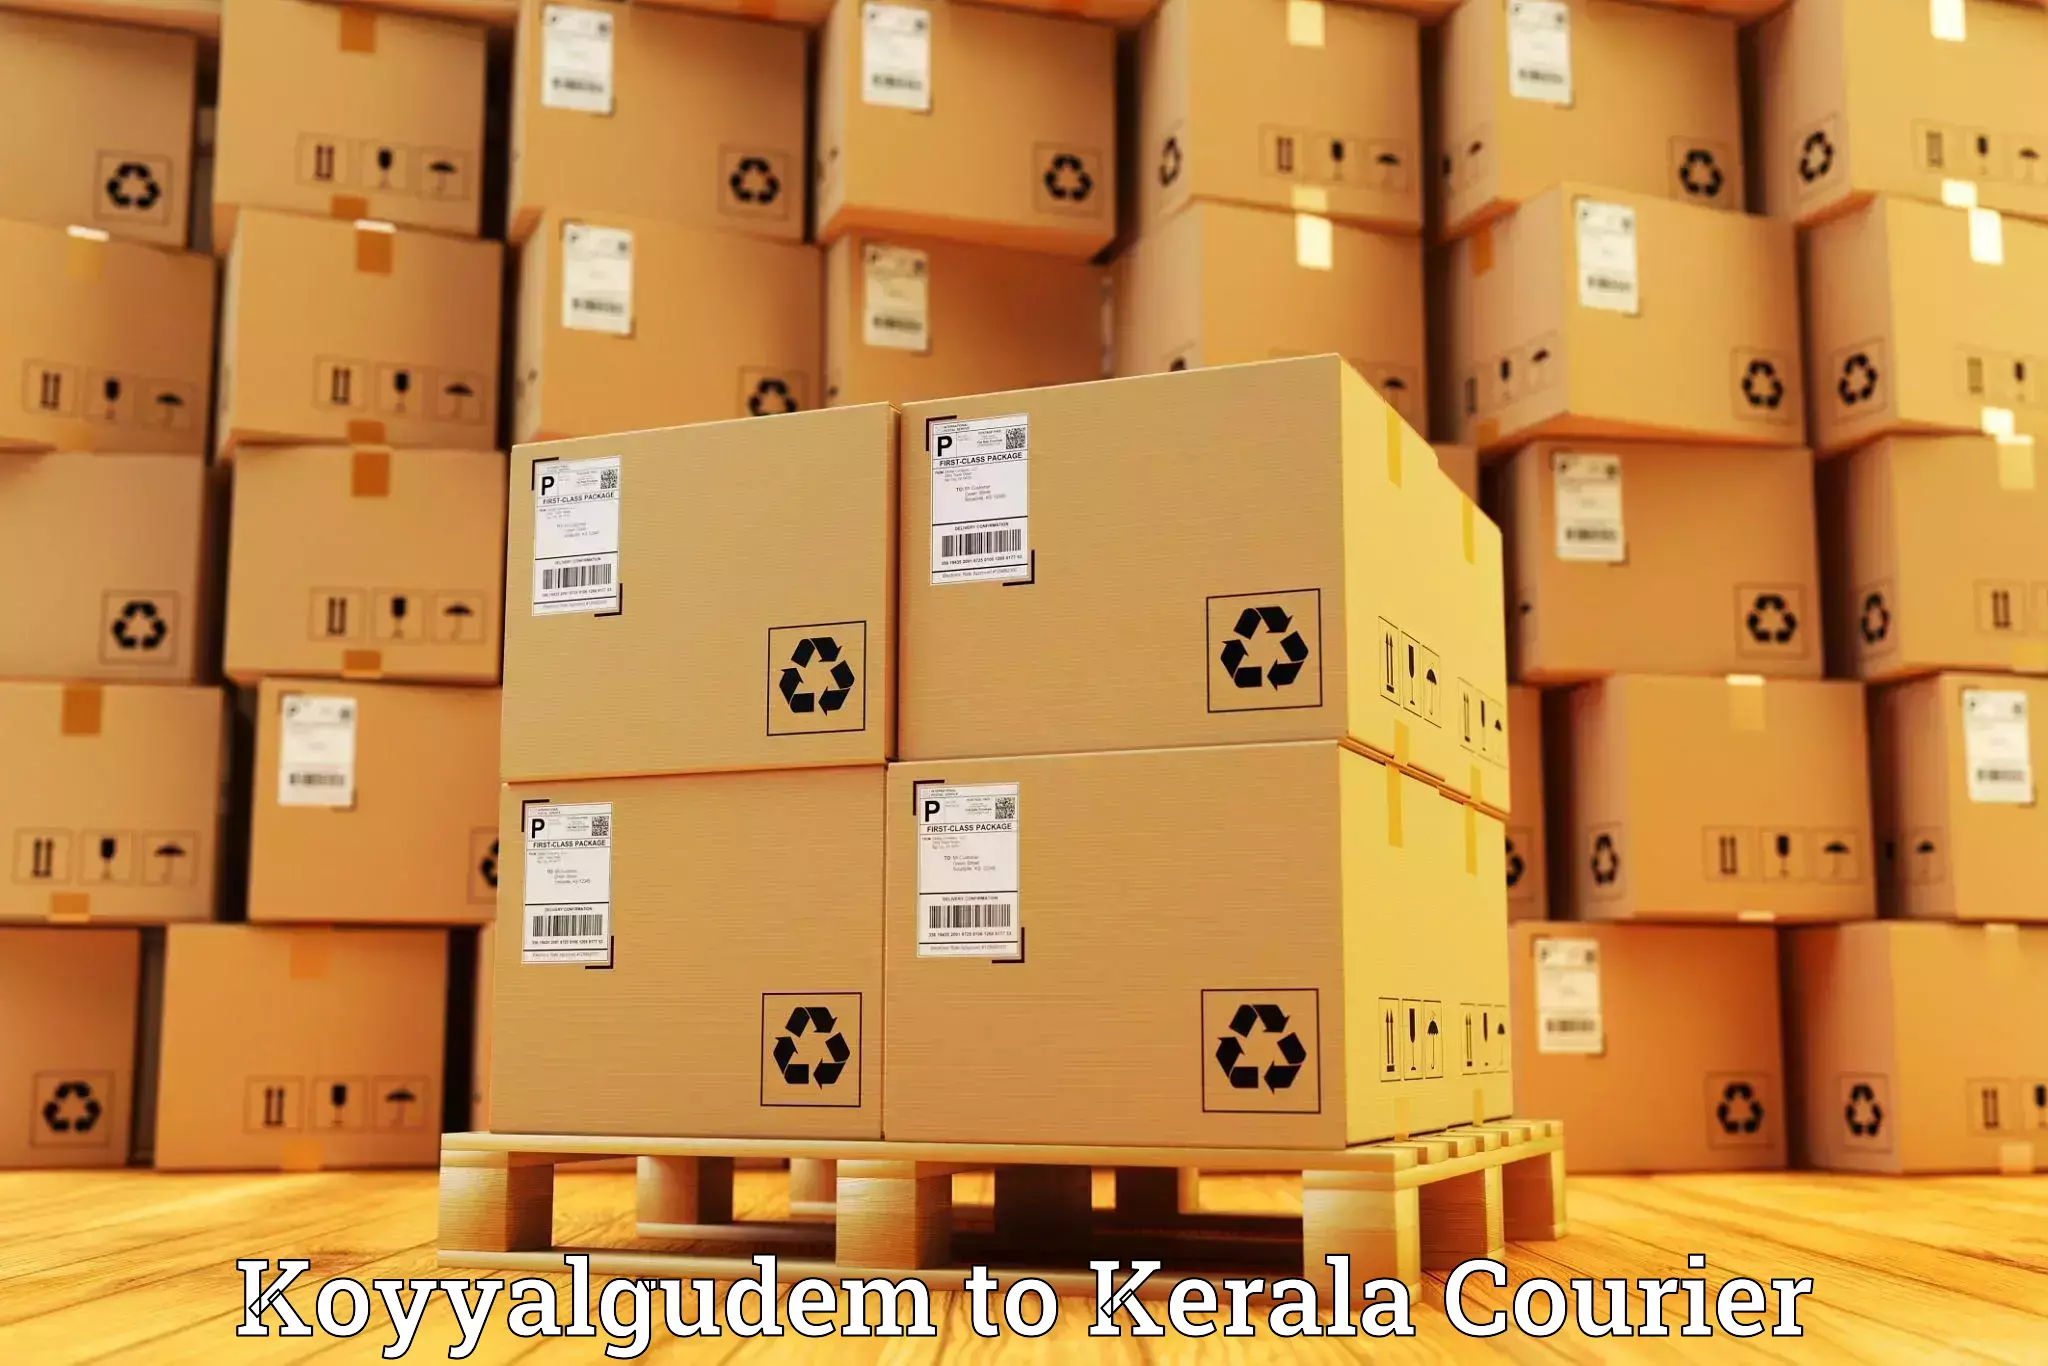 Courier service comparison Koyyalgudem to Tiruvalla